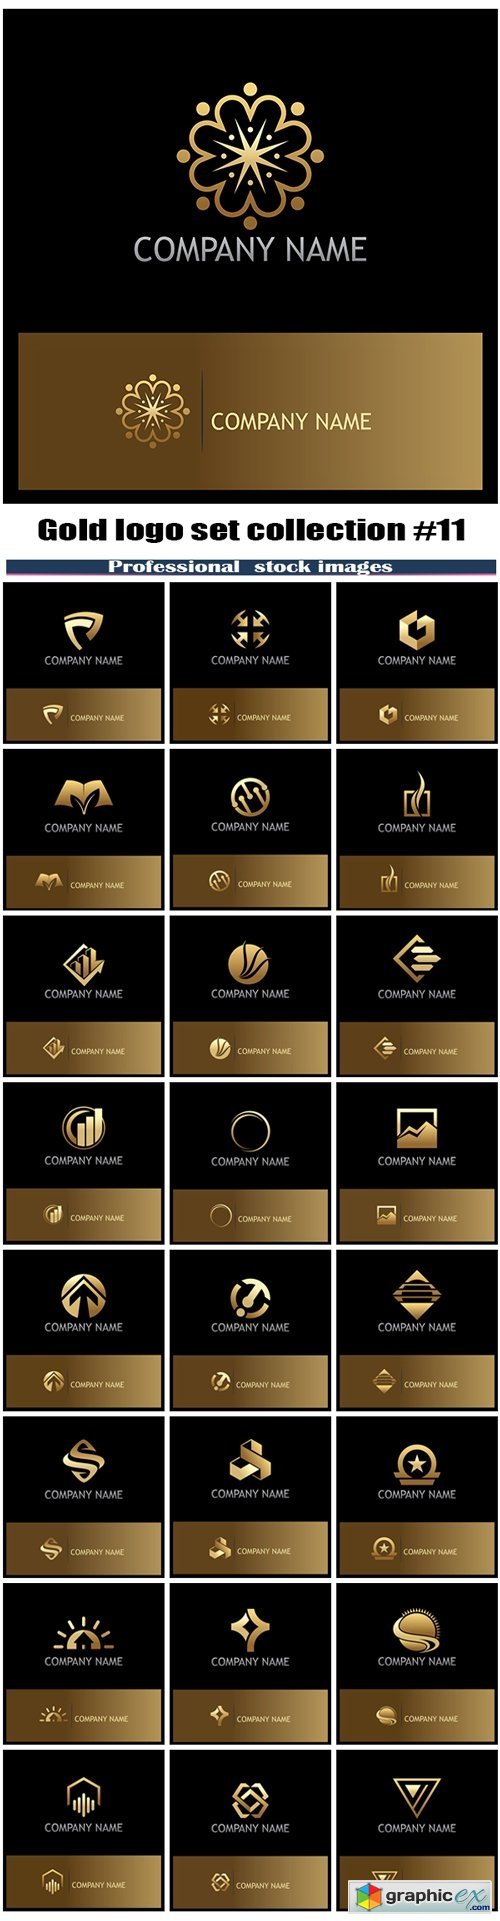 Gold logo set collection #11